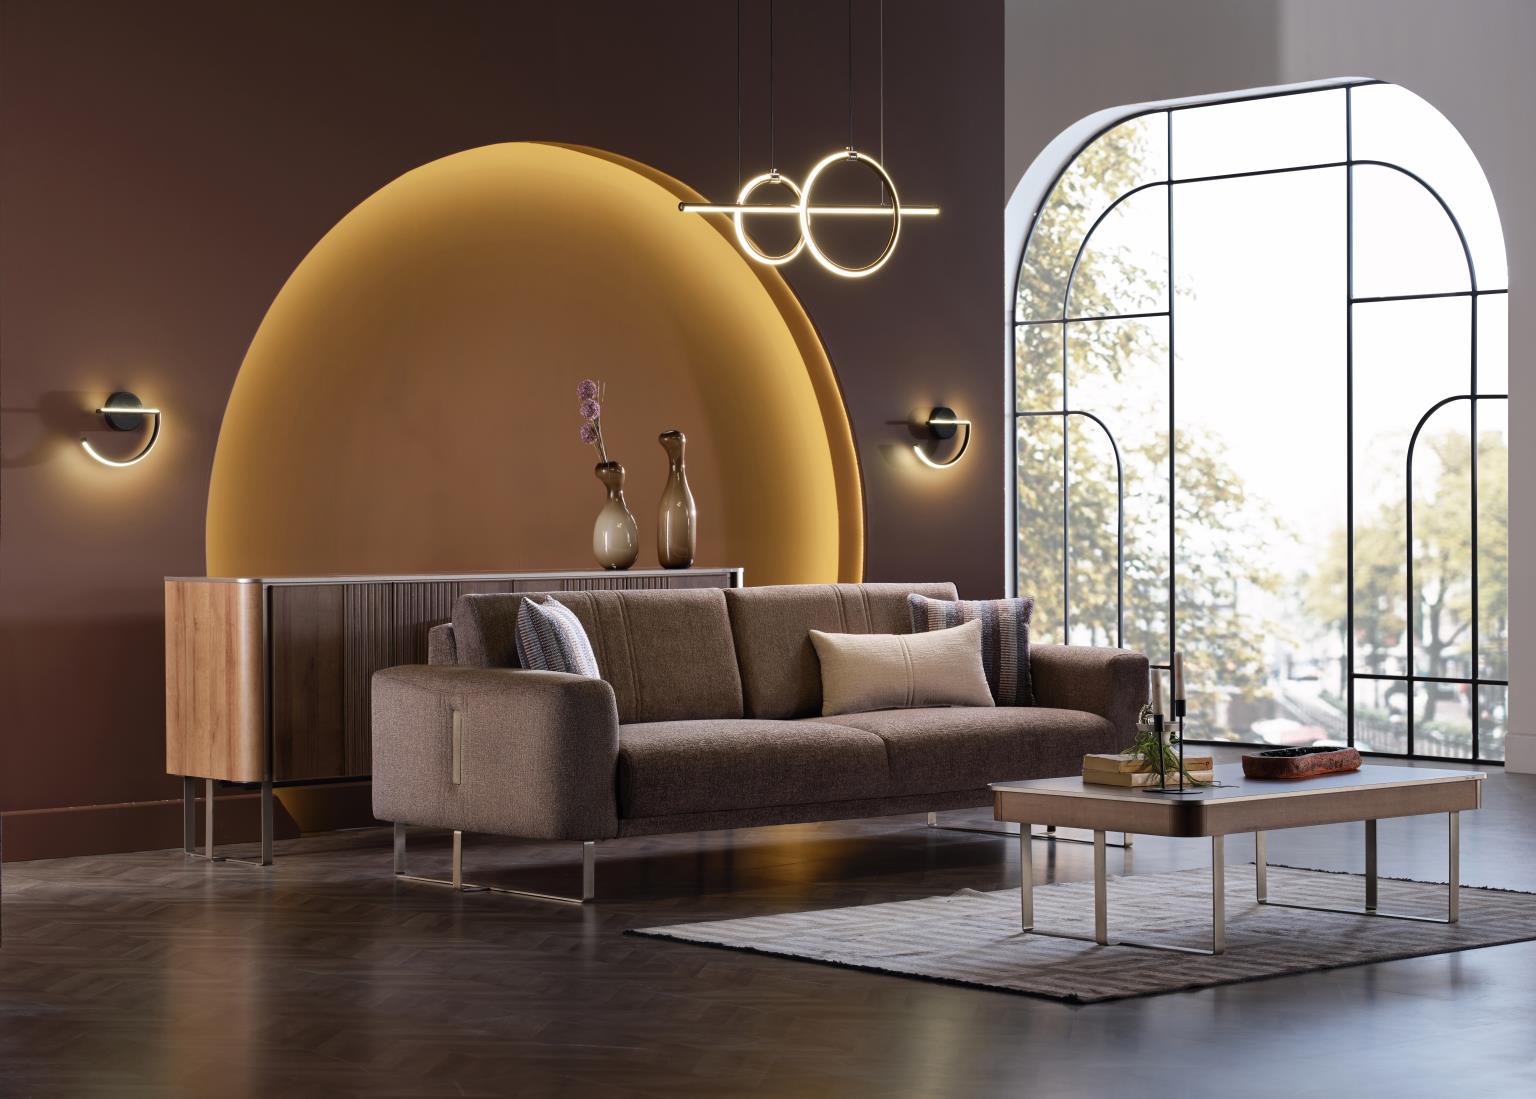 Mirante 3 Seat Sleeper - Home Store Furniture